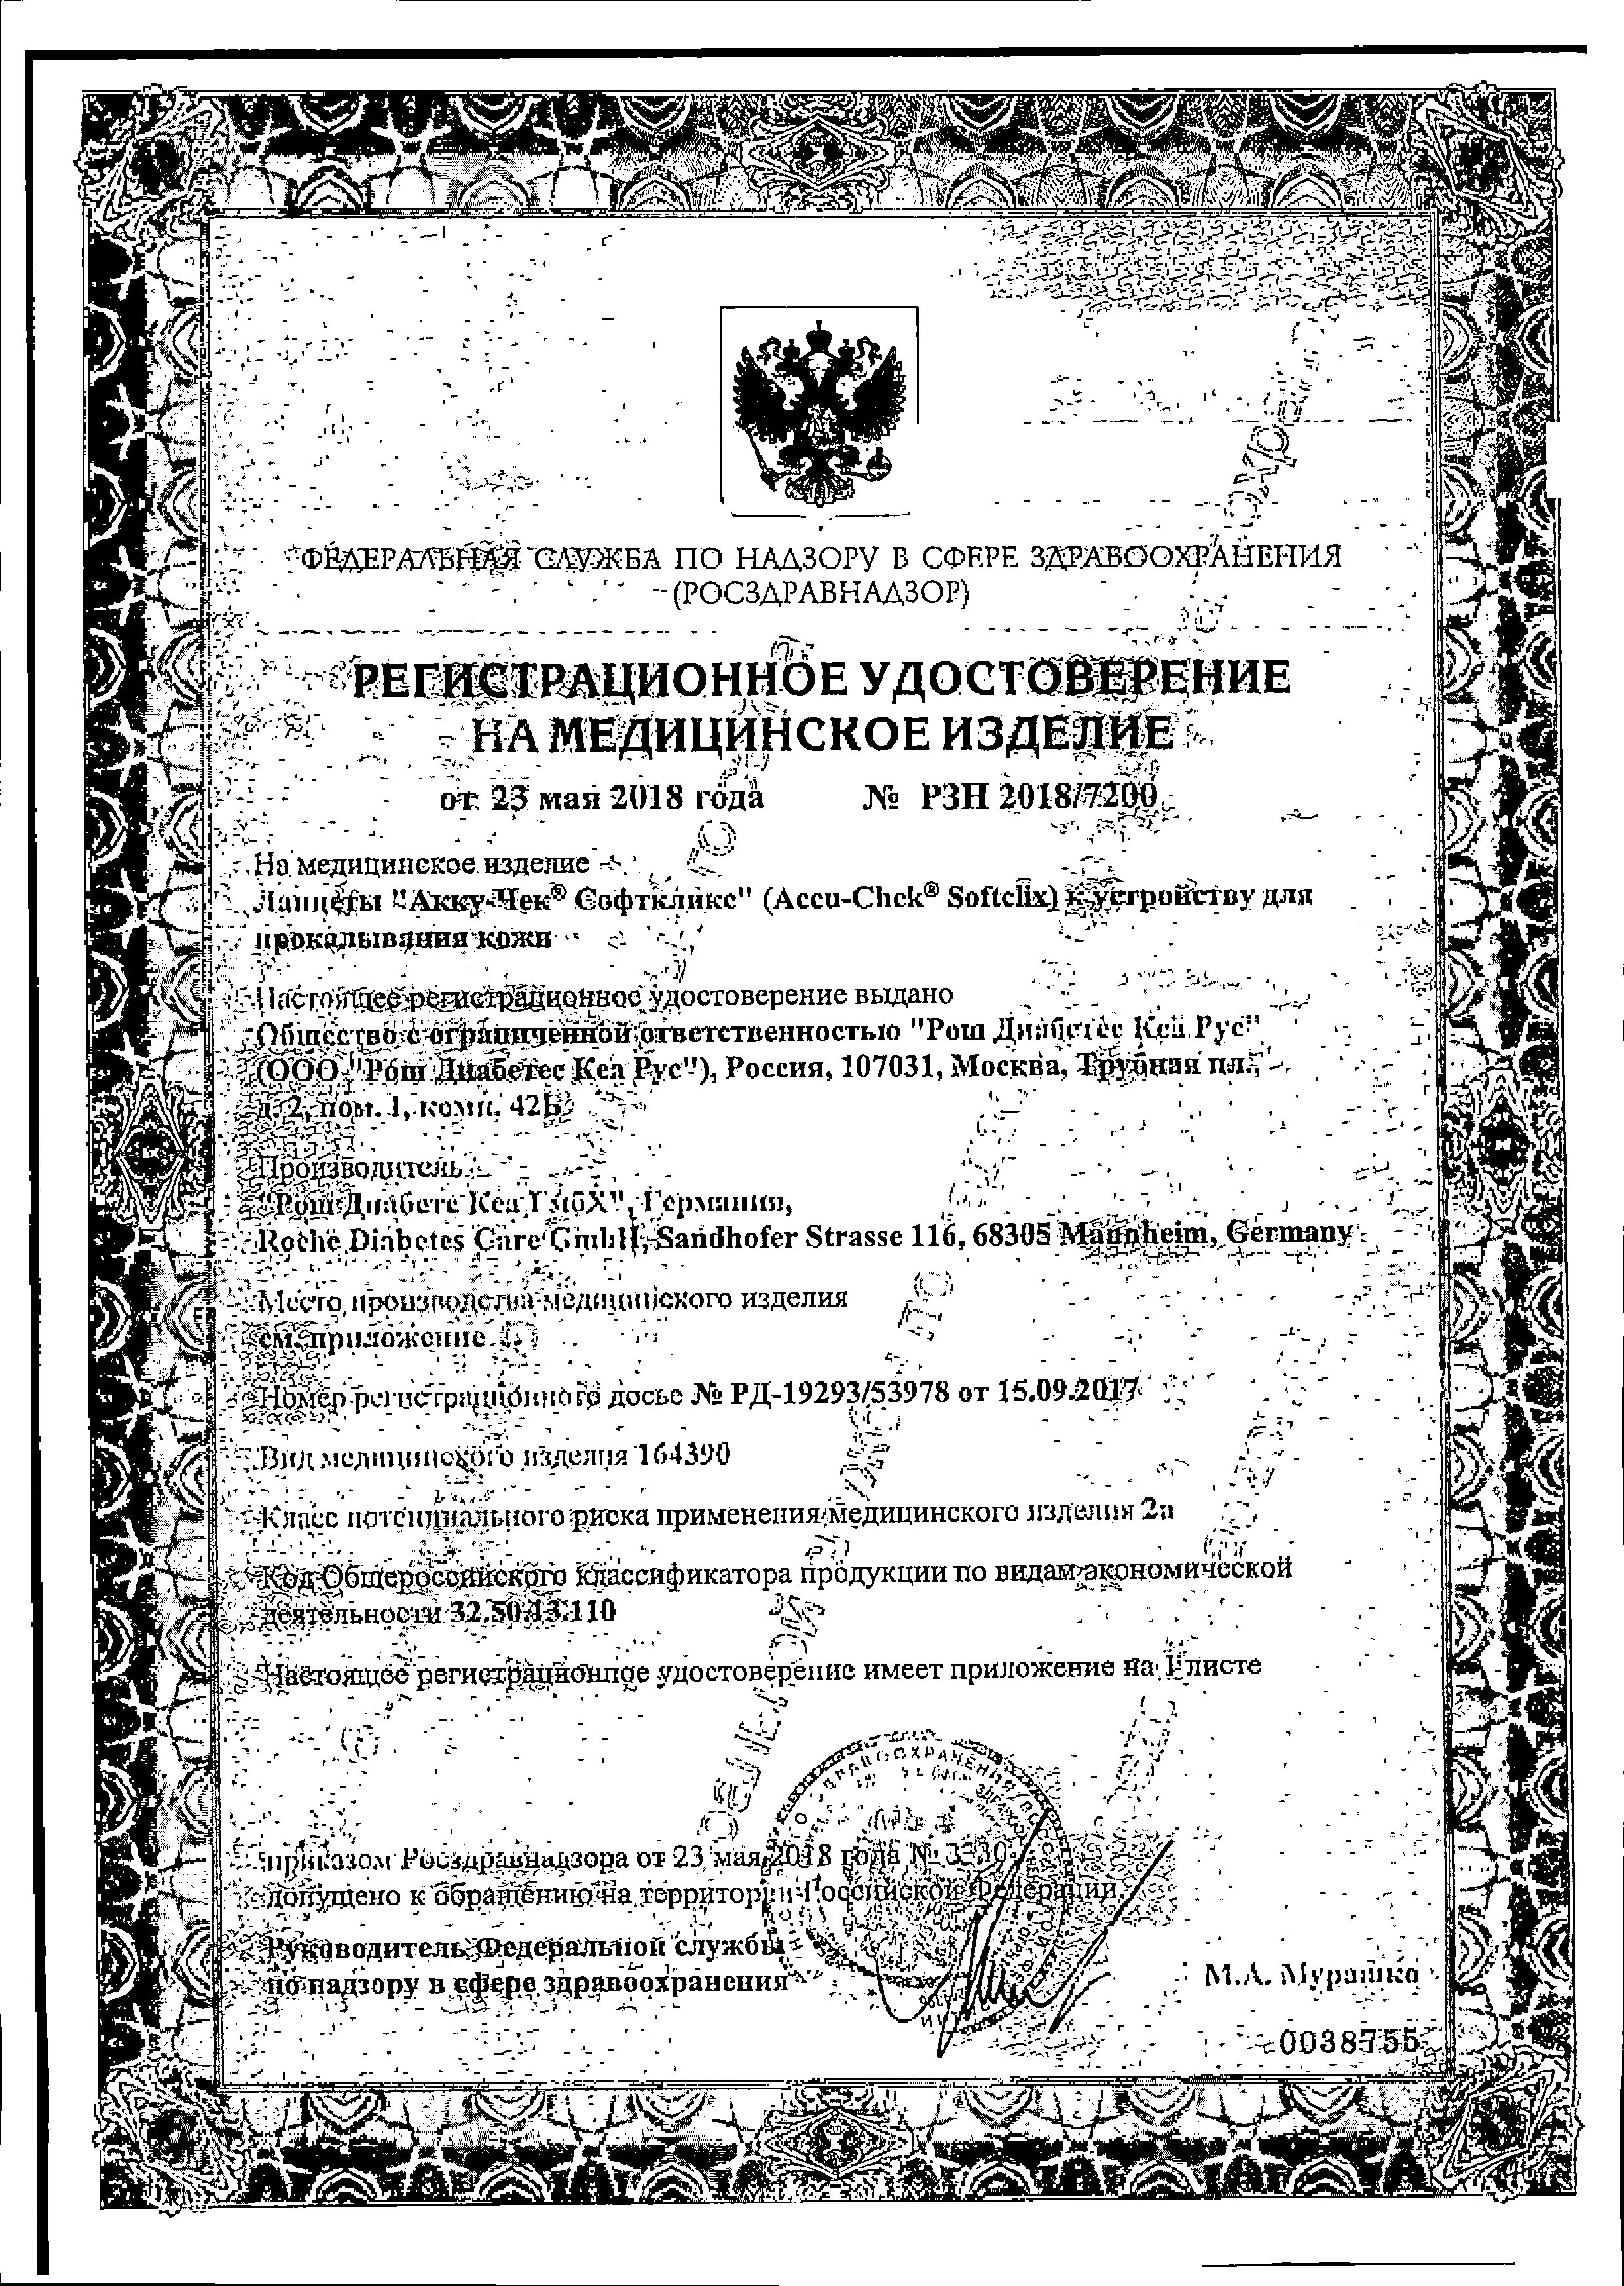 Accu-Chek Softclix Ланцеты сертификат